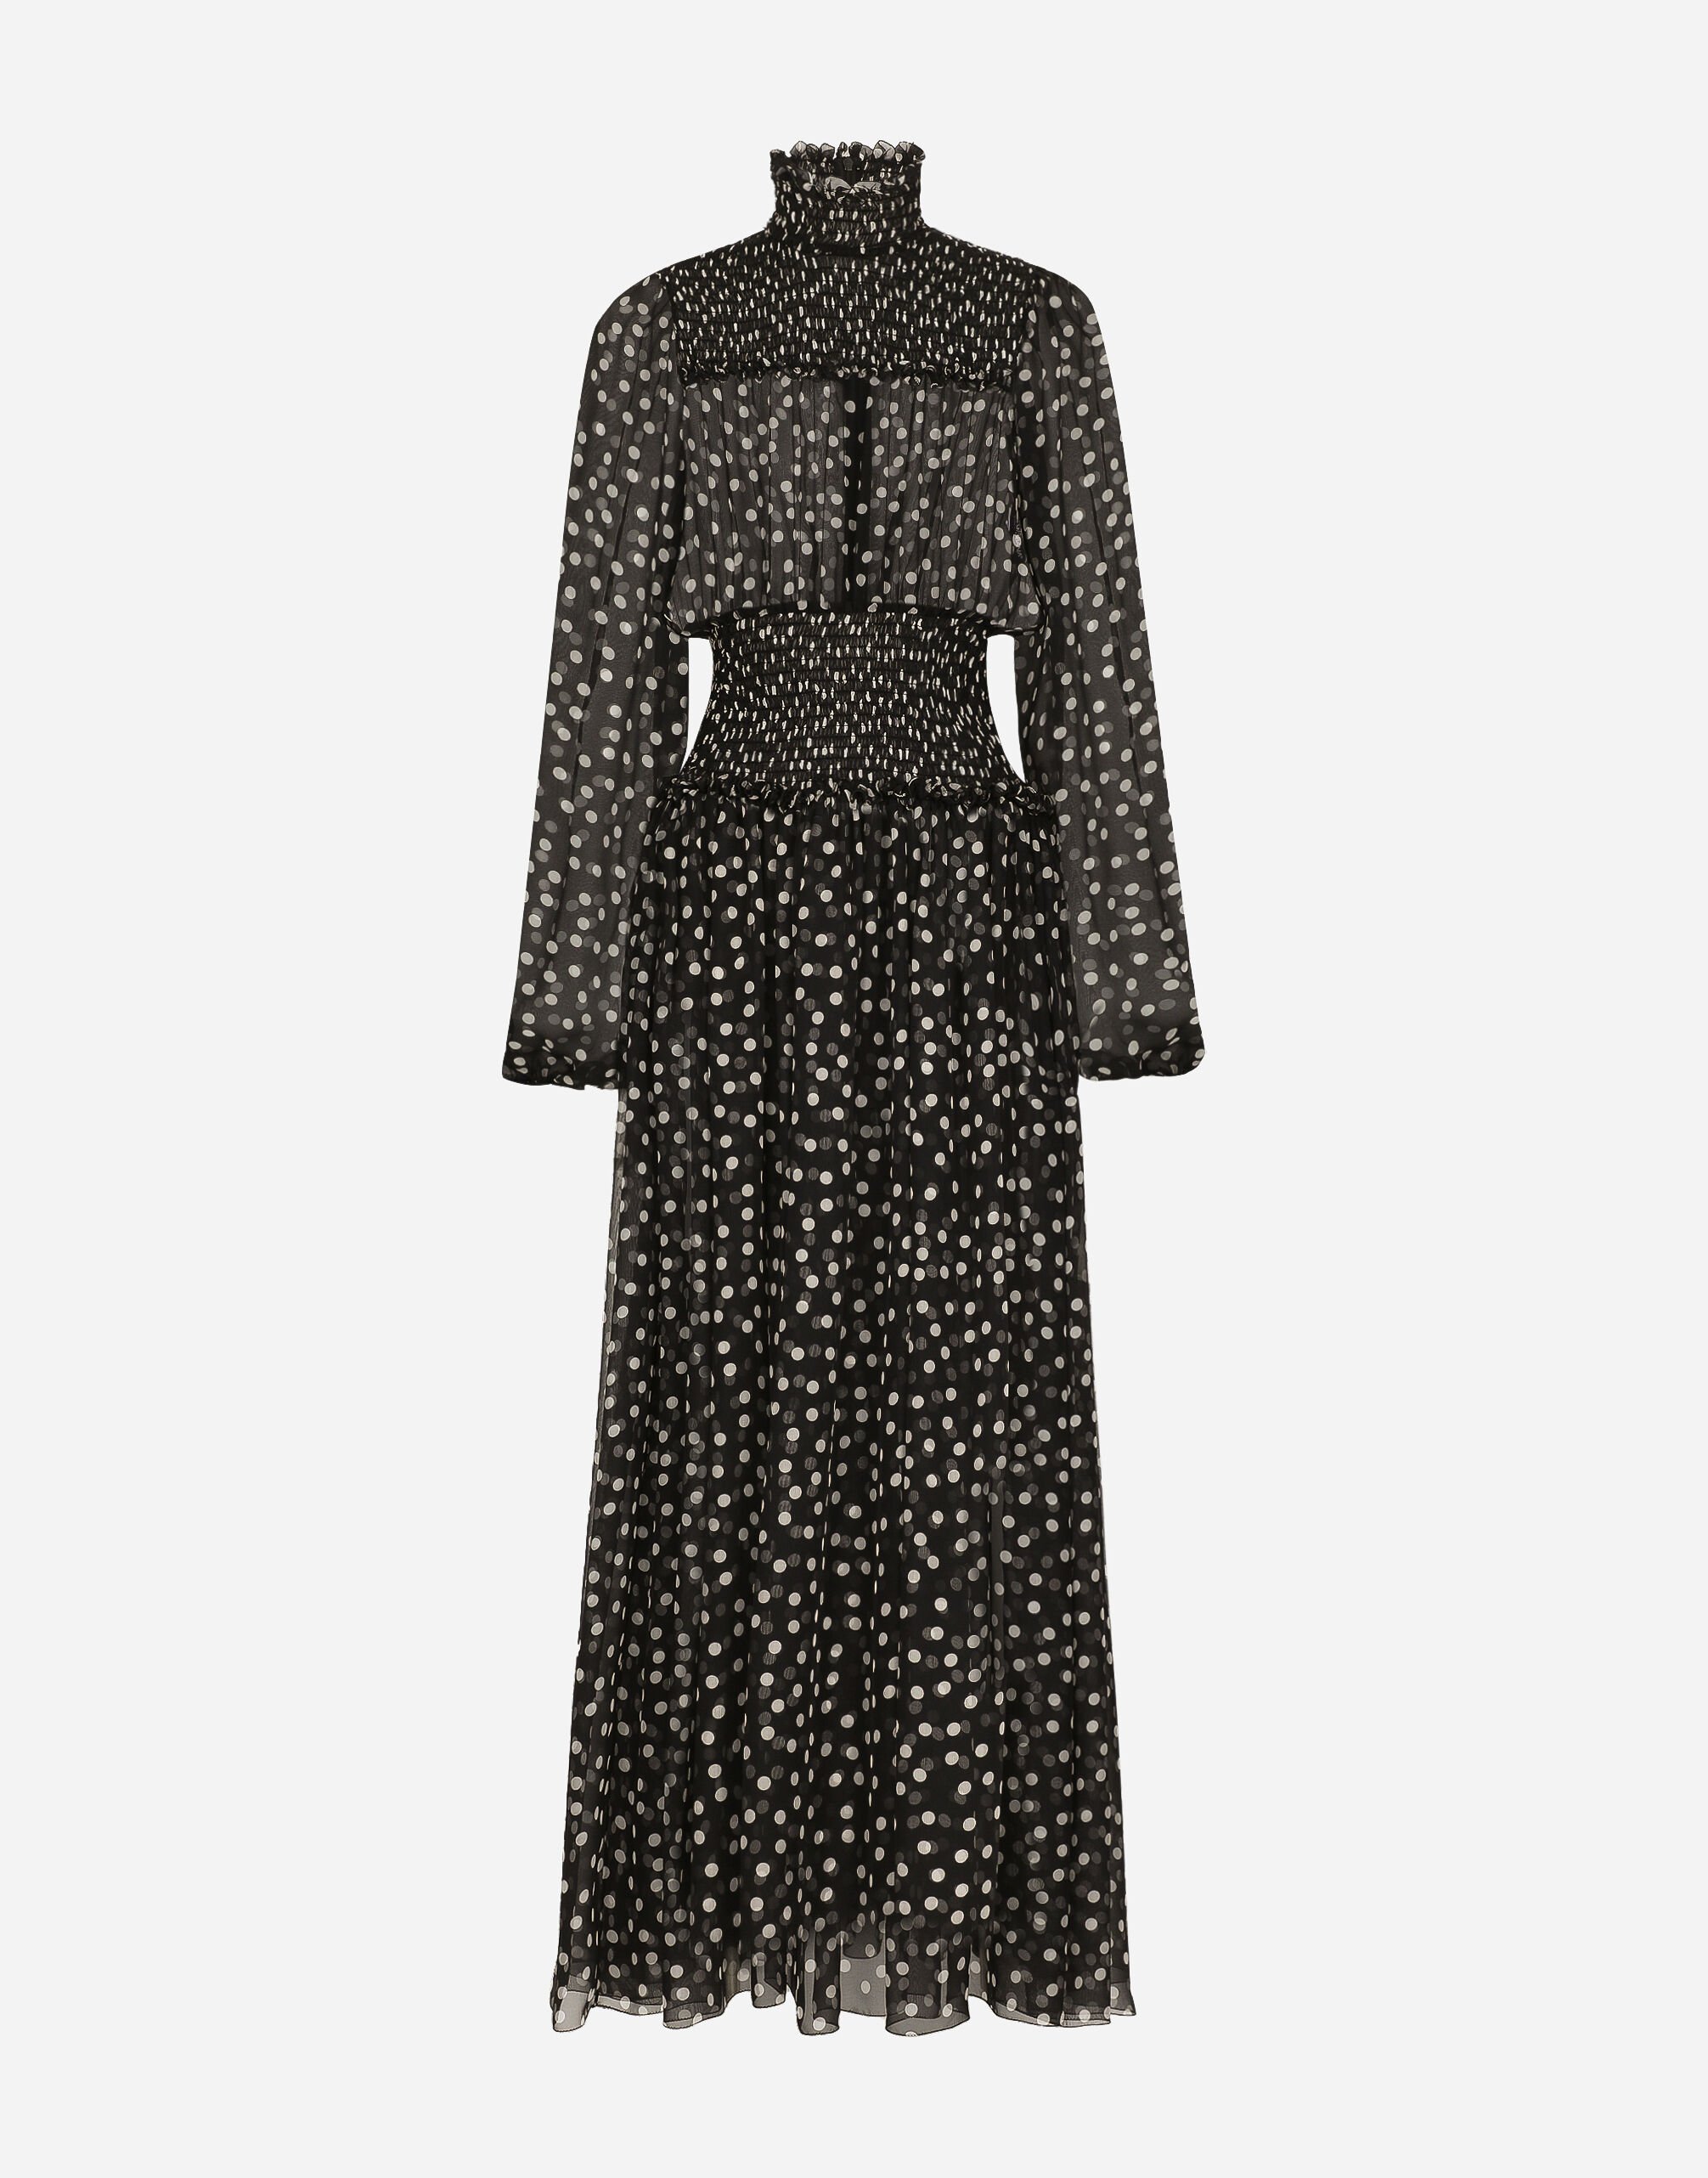 Chiffon midi dress with smock stitching and micro-polka dot print